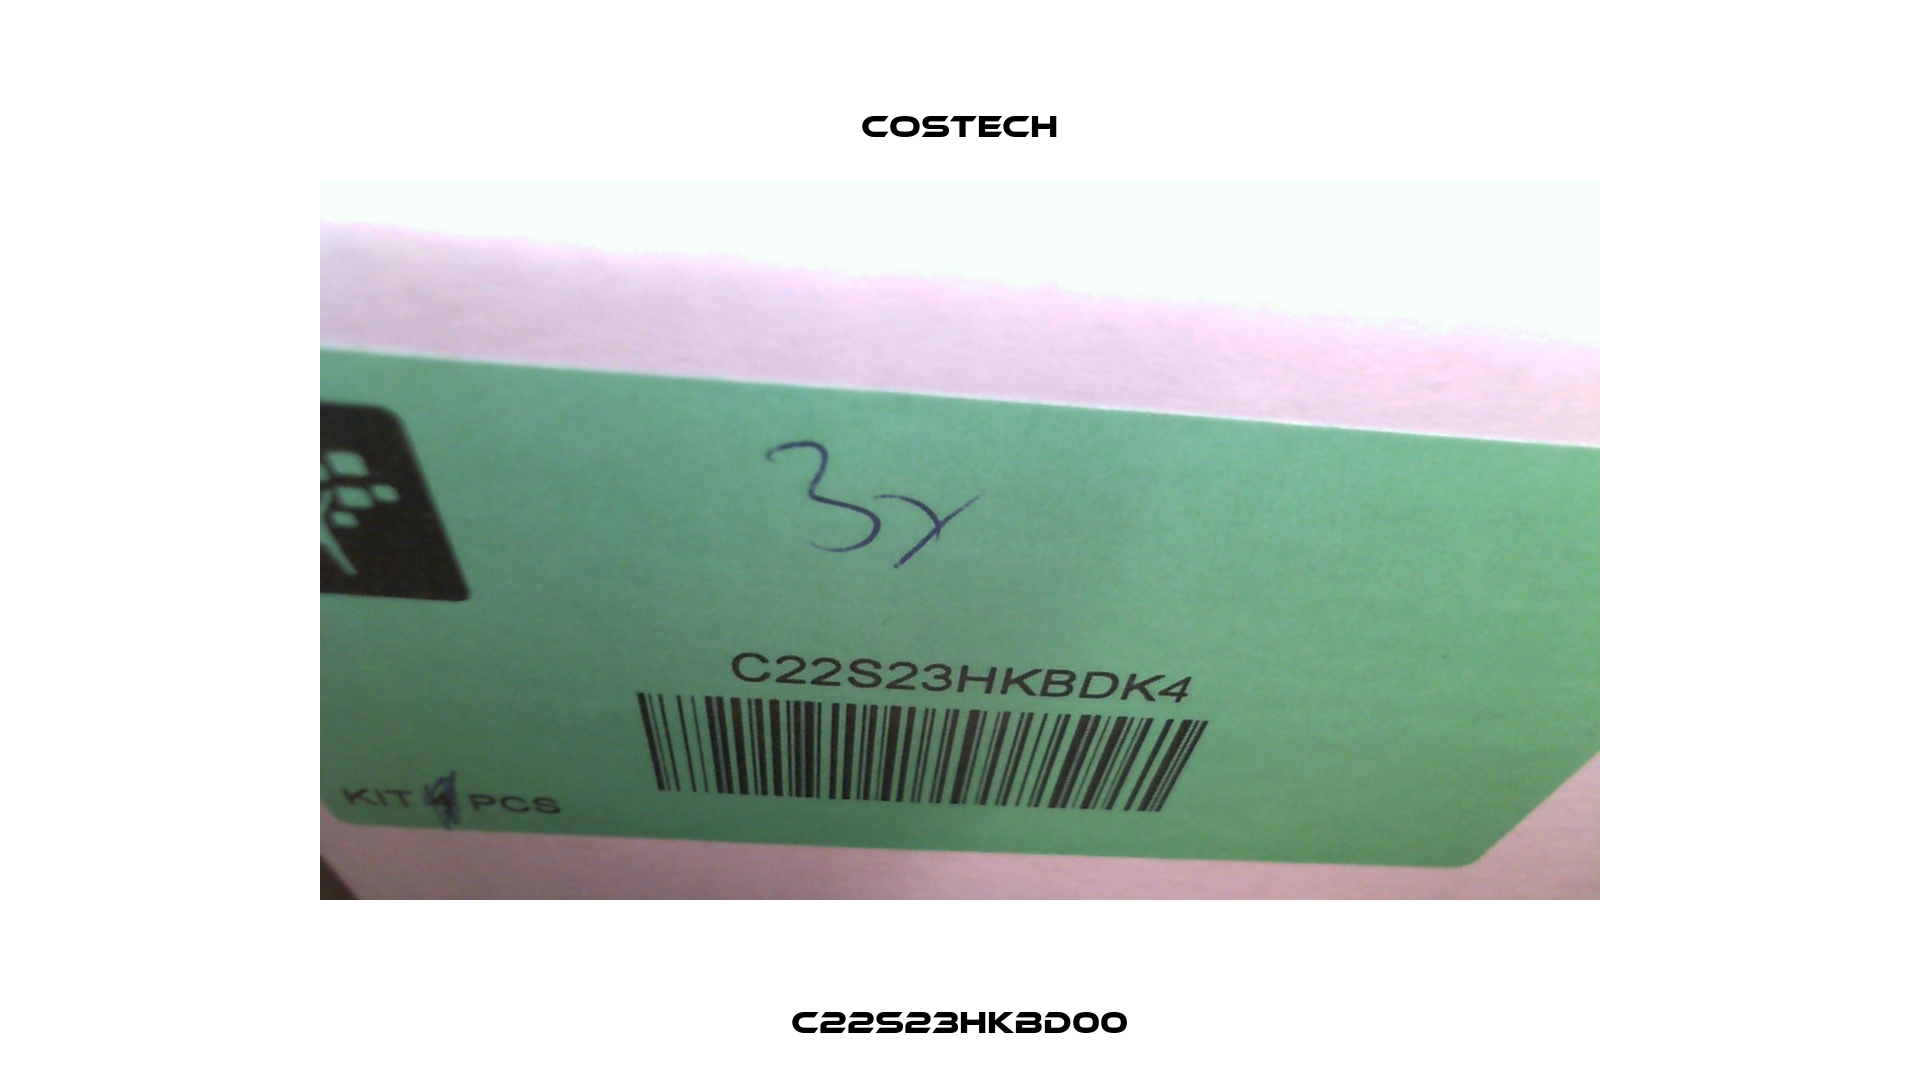 C22S23HKBD00 Costech